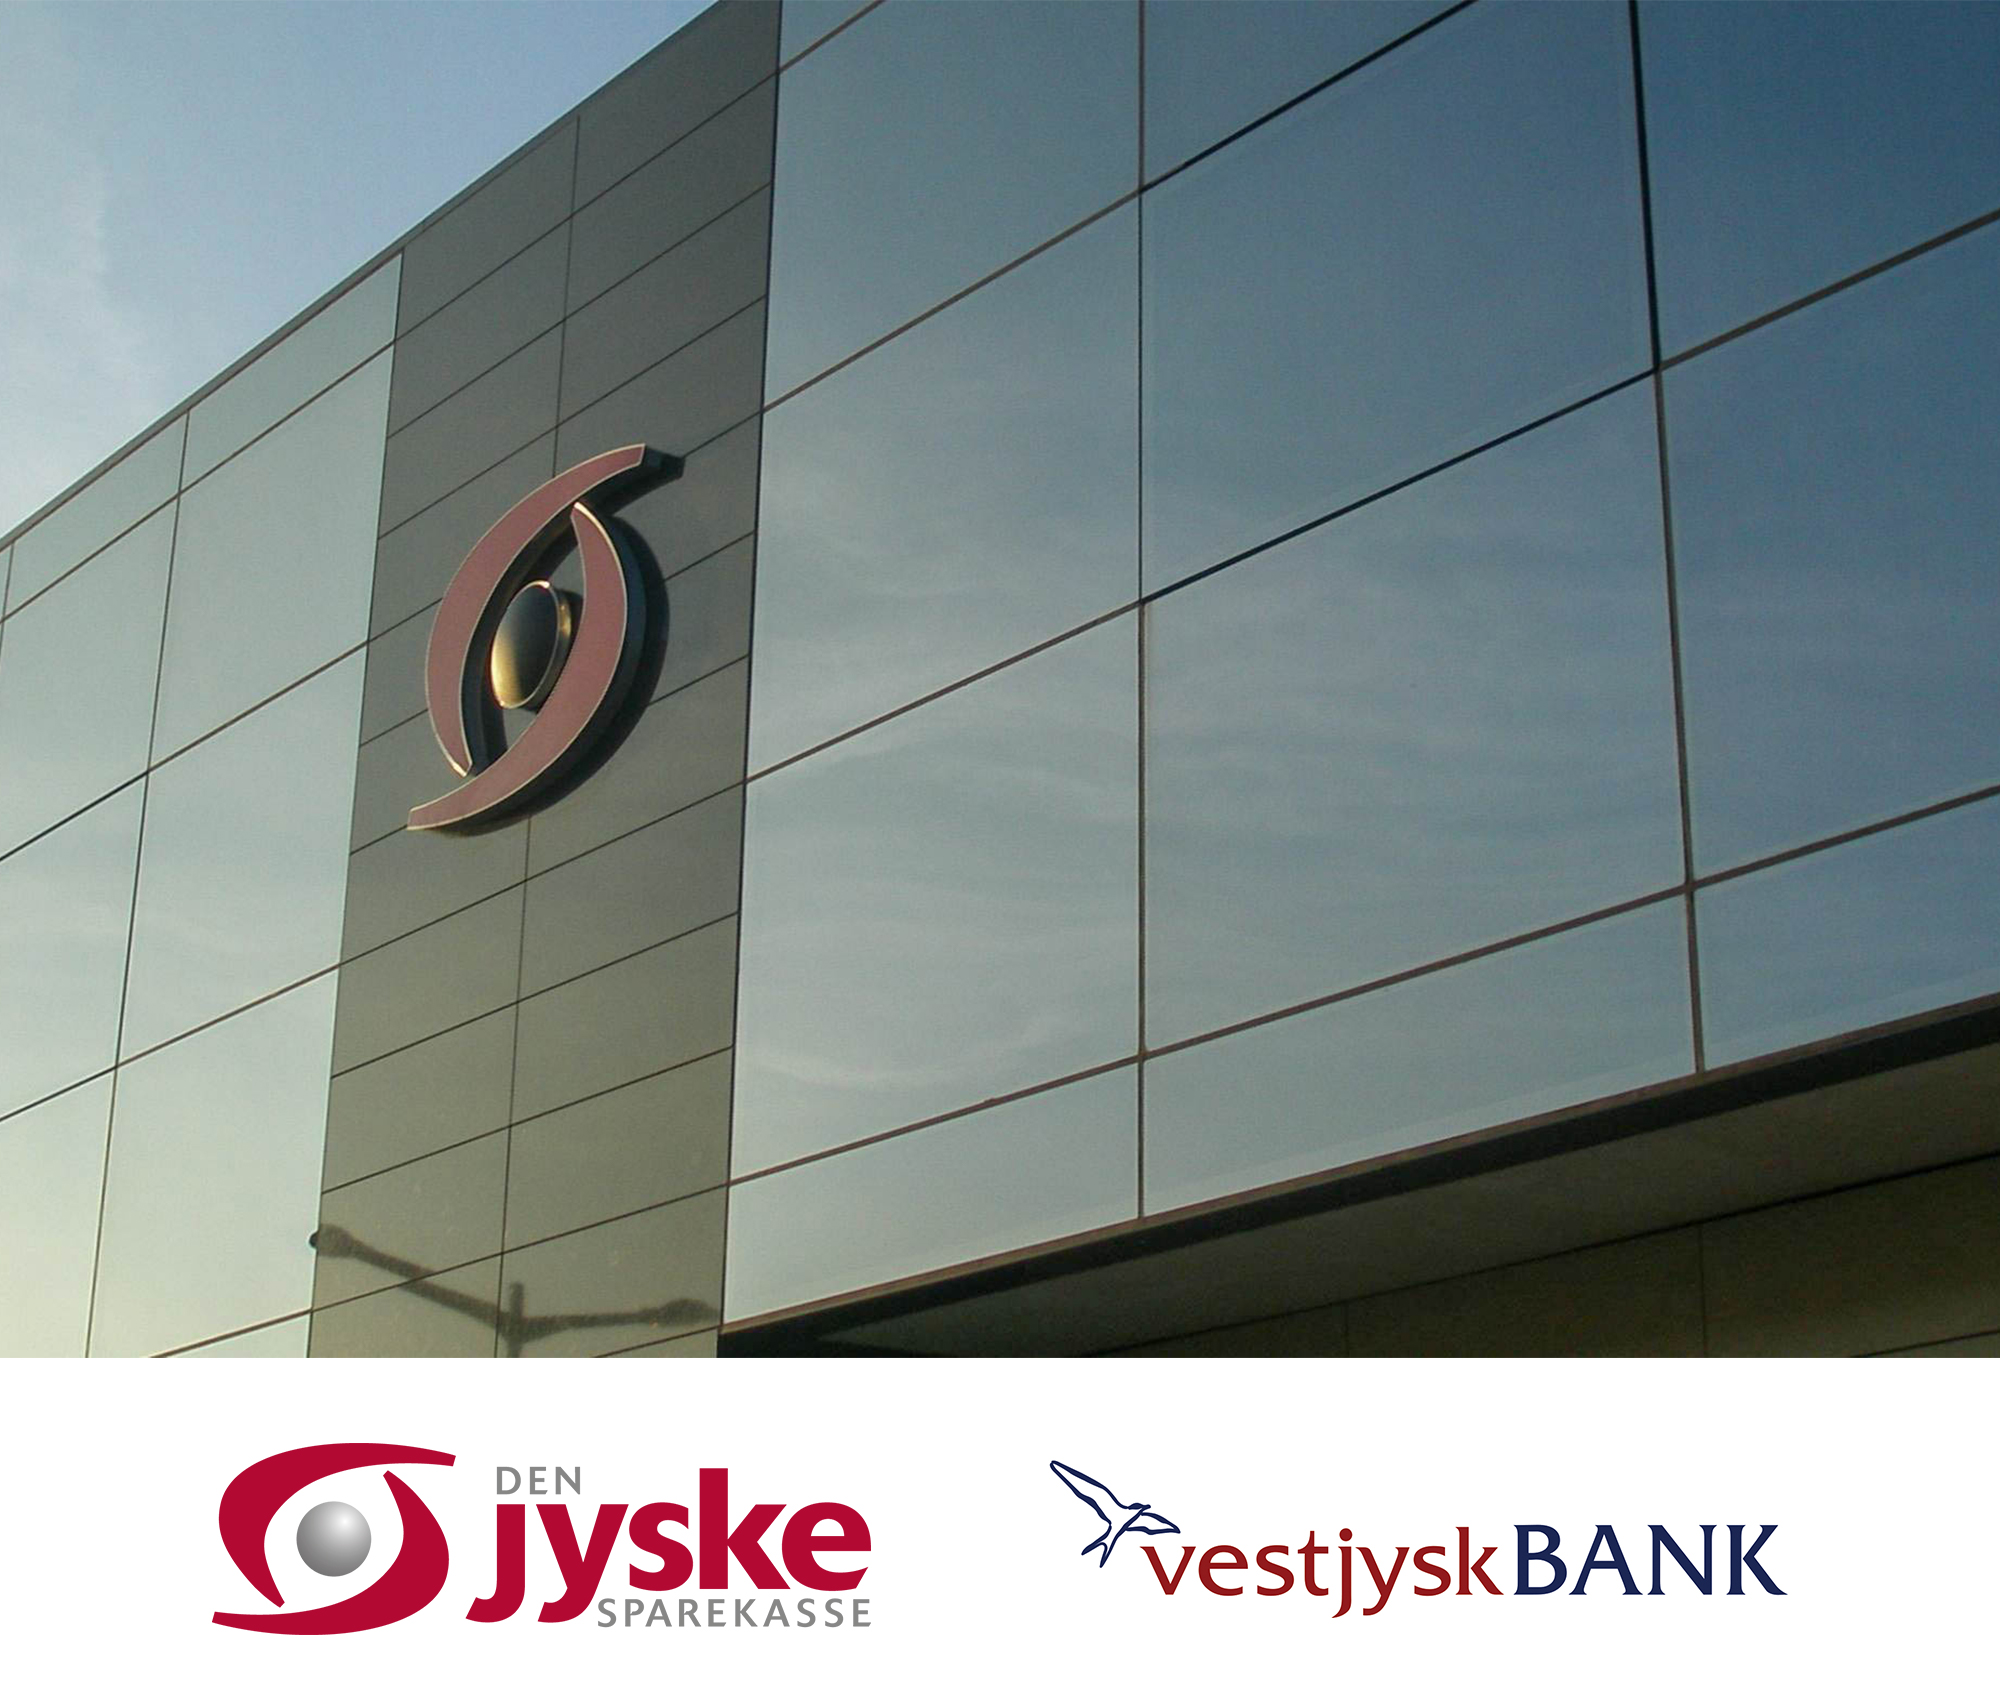 Financial advisor on the merger between Den Jyske Sparekasse and Vestjysk Bank